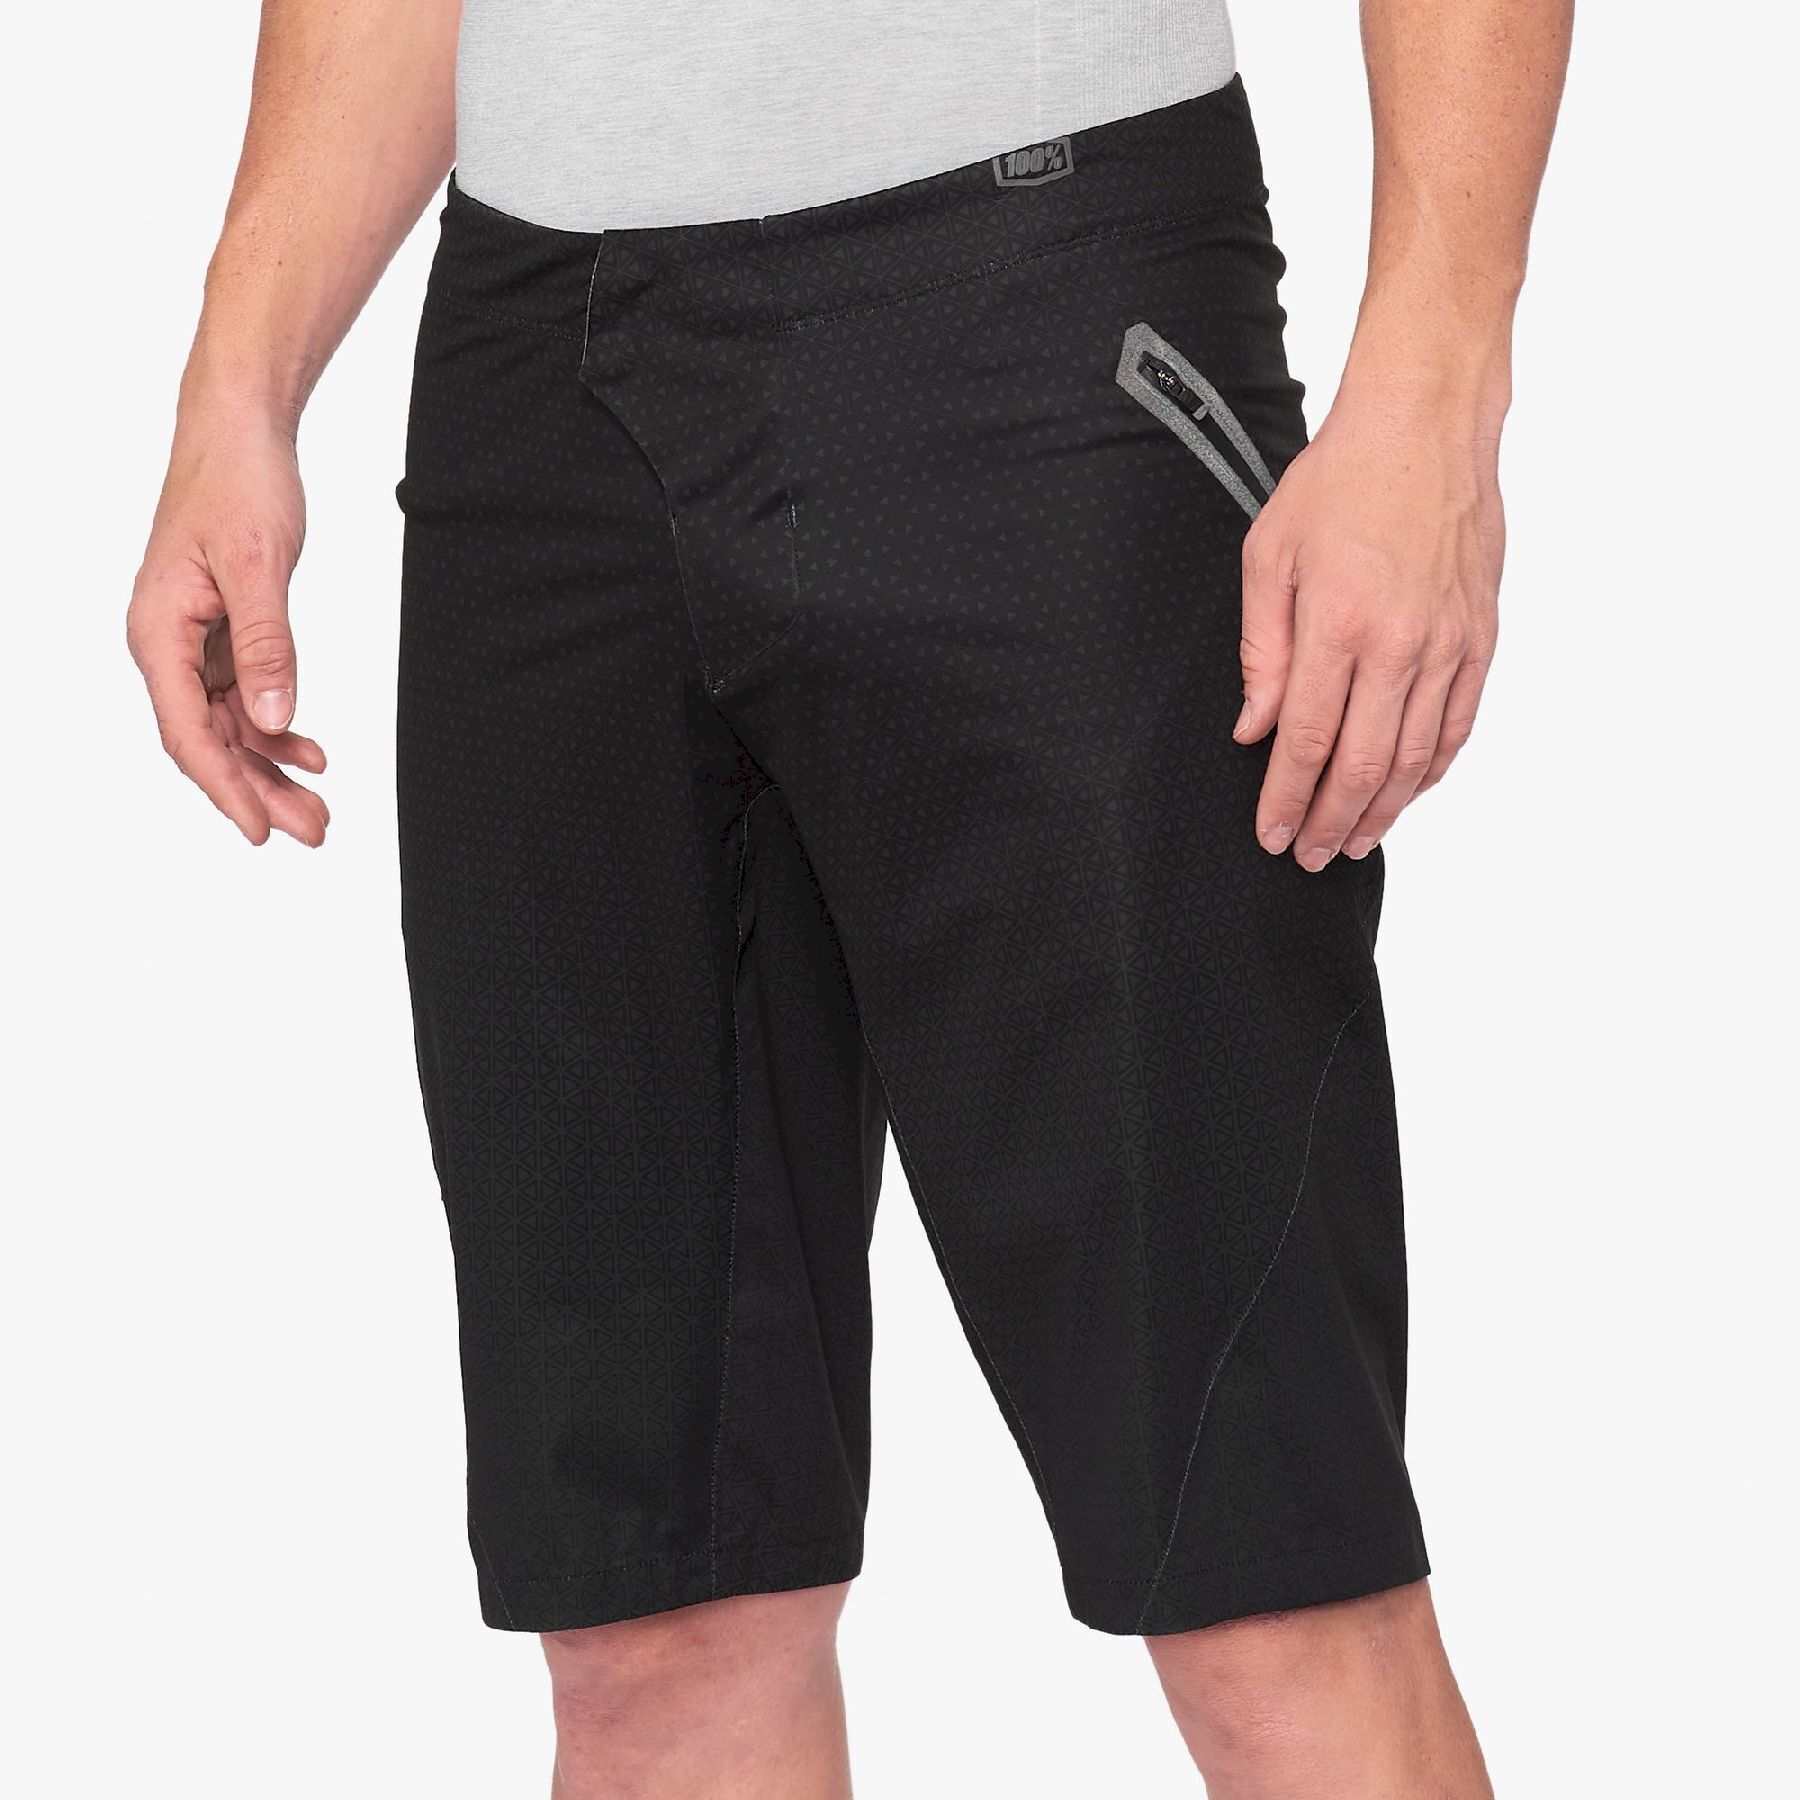 100% Hydromatic - MTB shorts - Men's